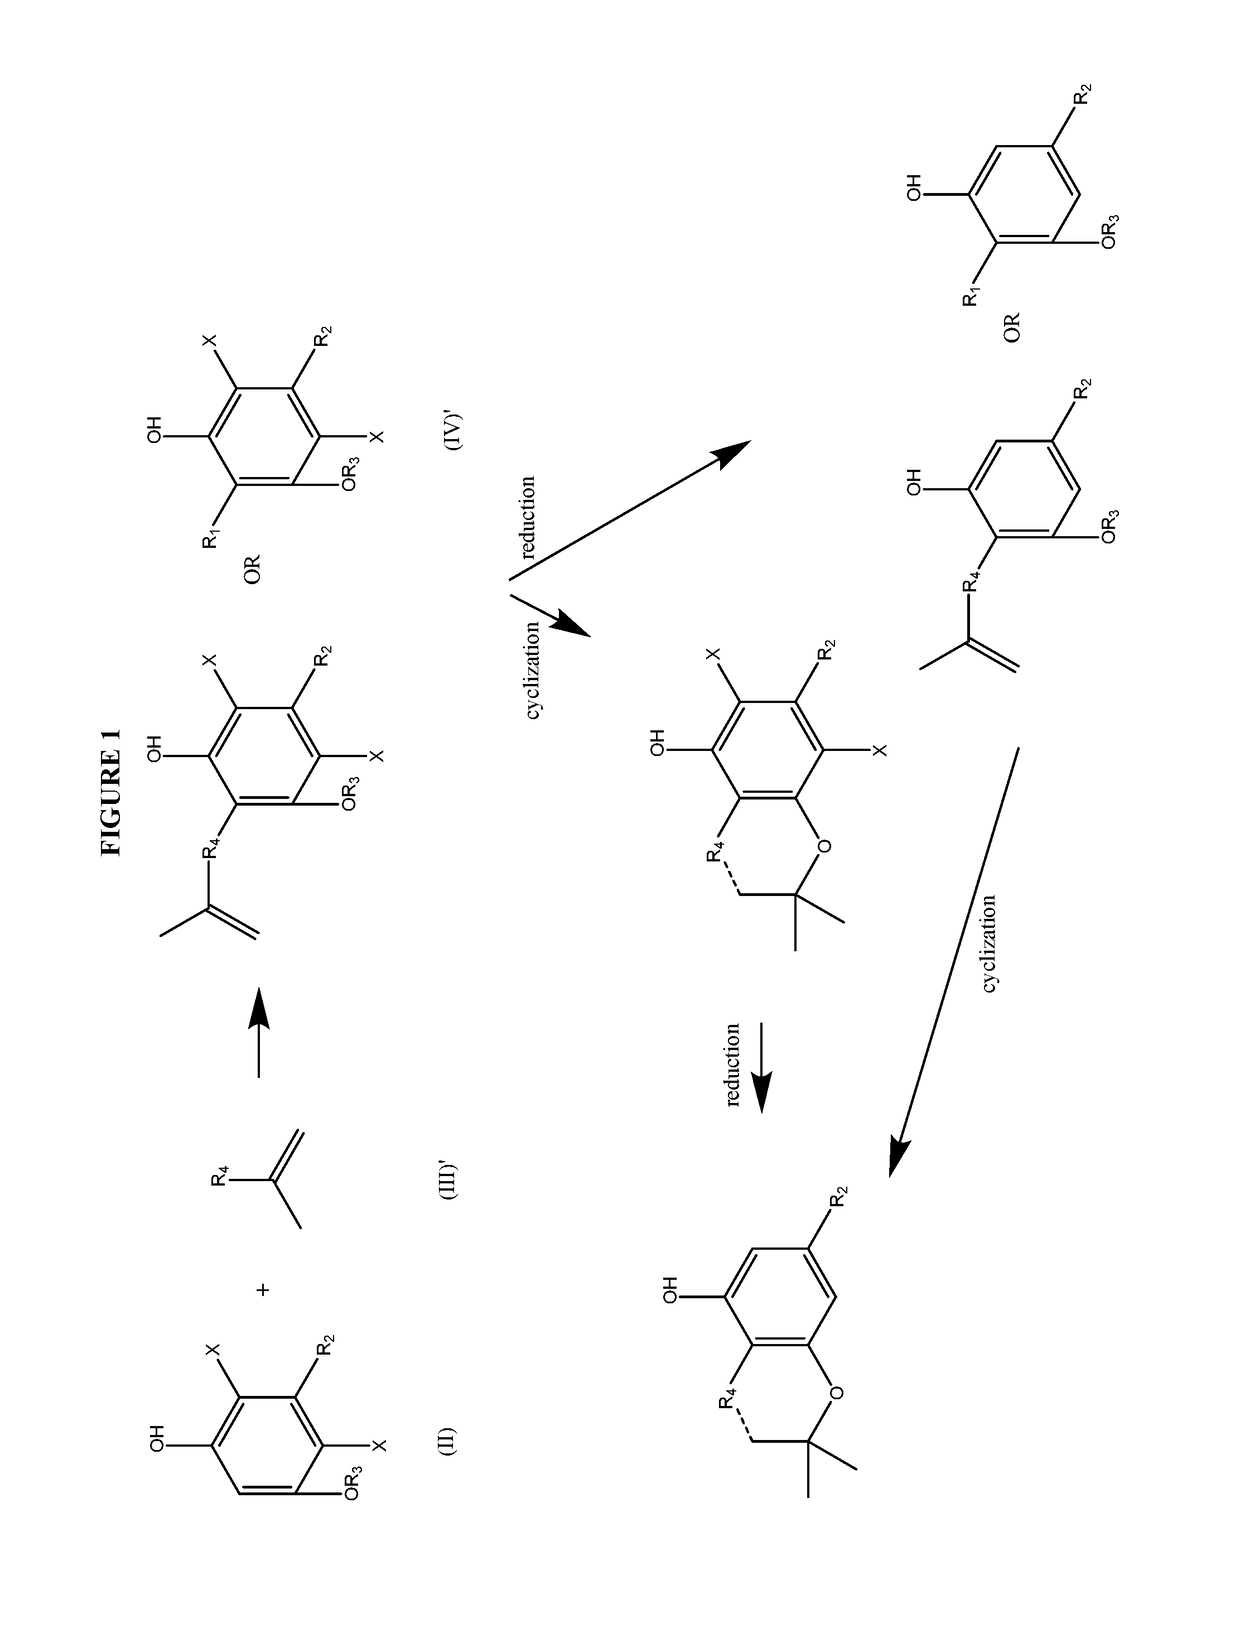 Process for the production of cannabidiol and delta-9-tetrahydrocannabinol